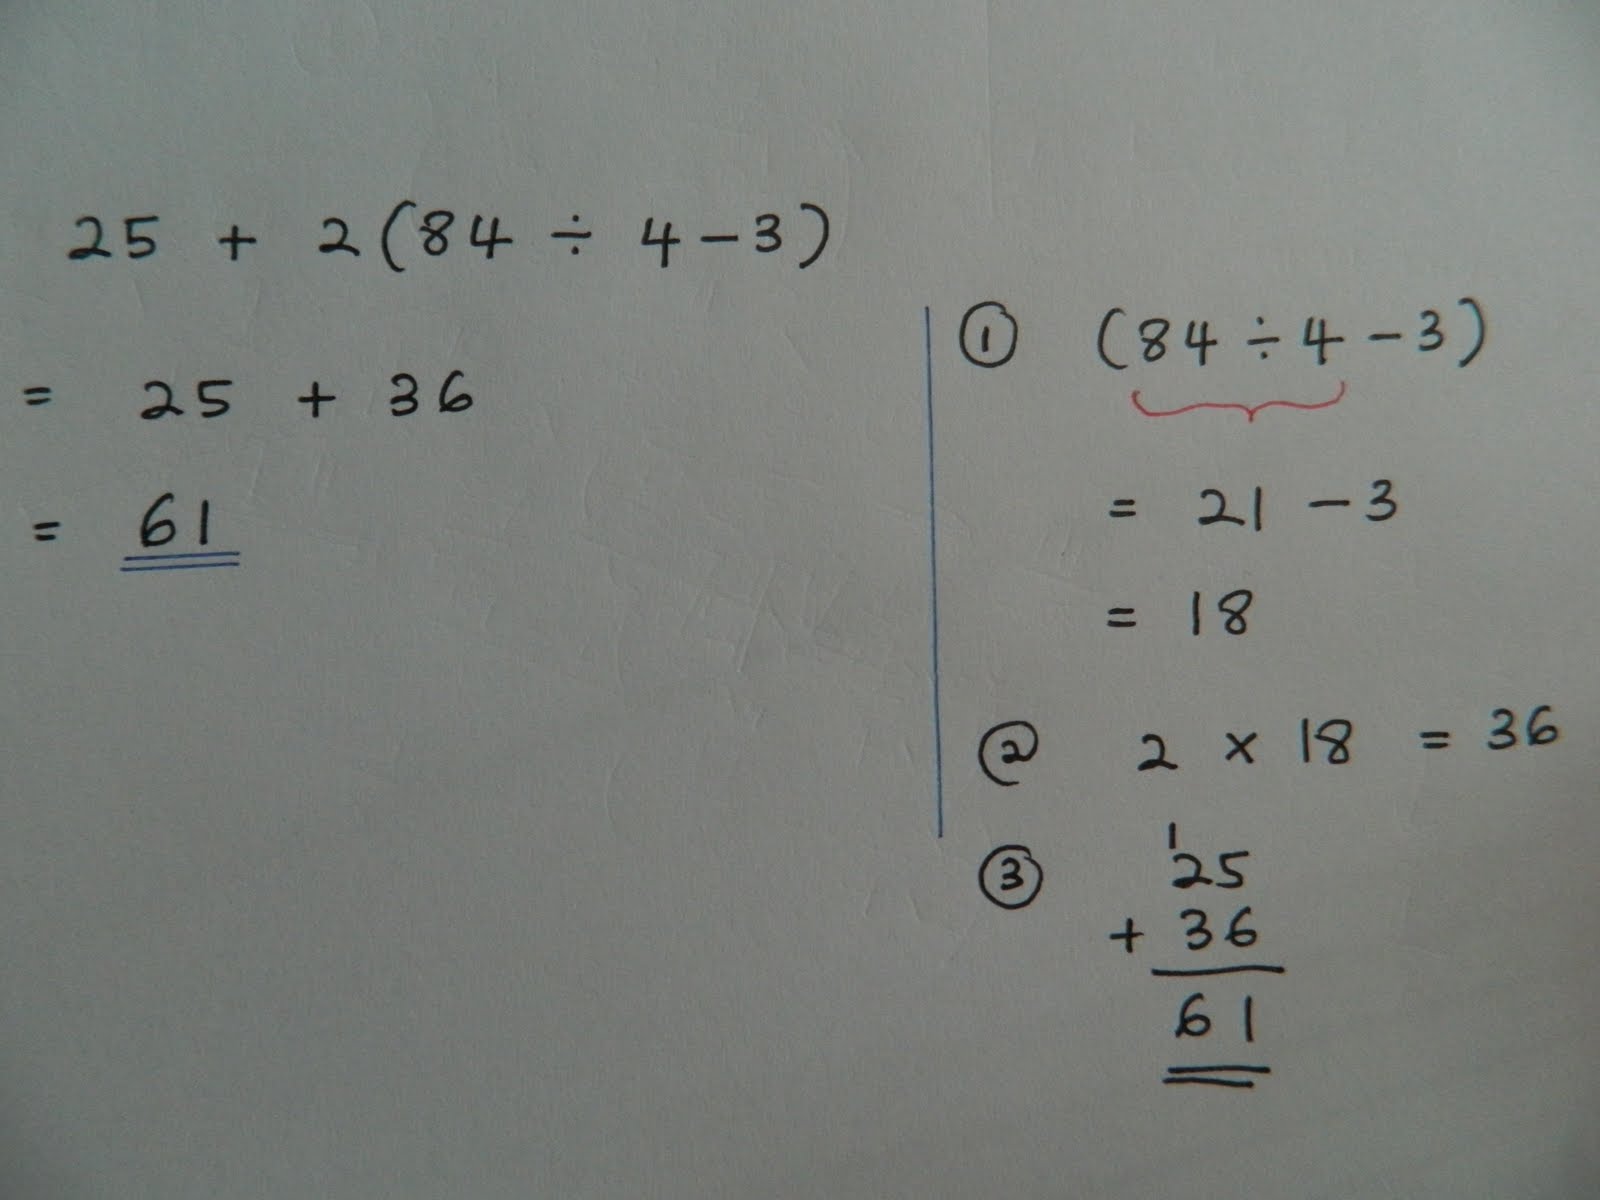 Soalan Matematik Tahun 3 Bab 1